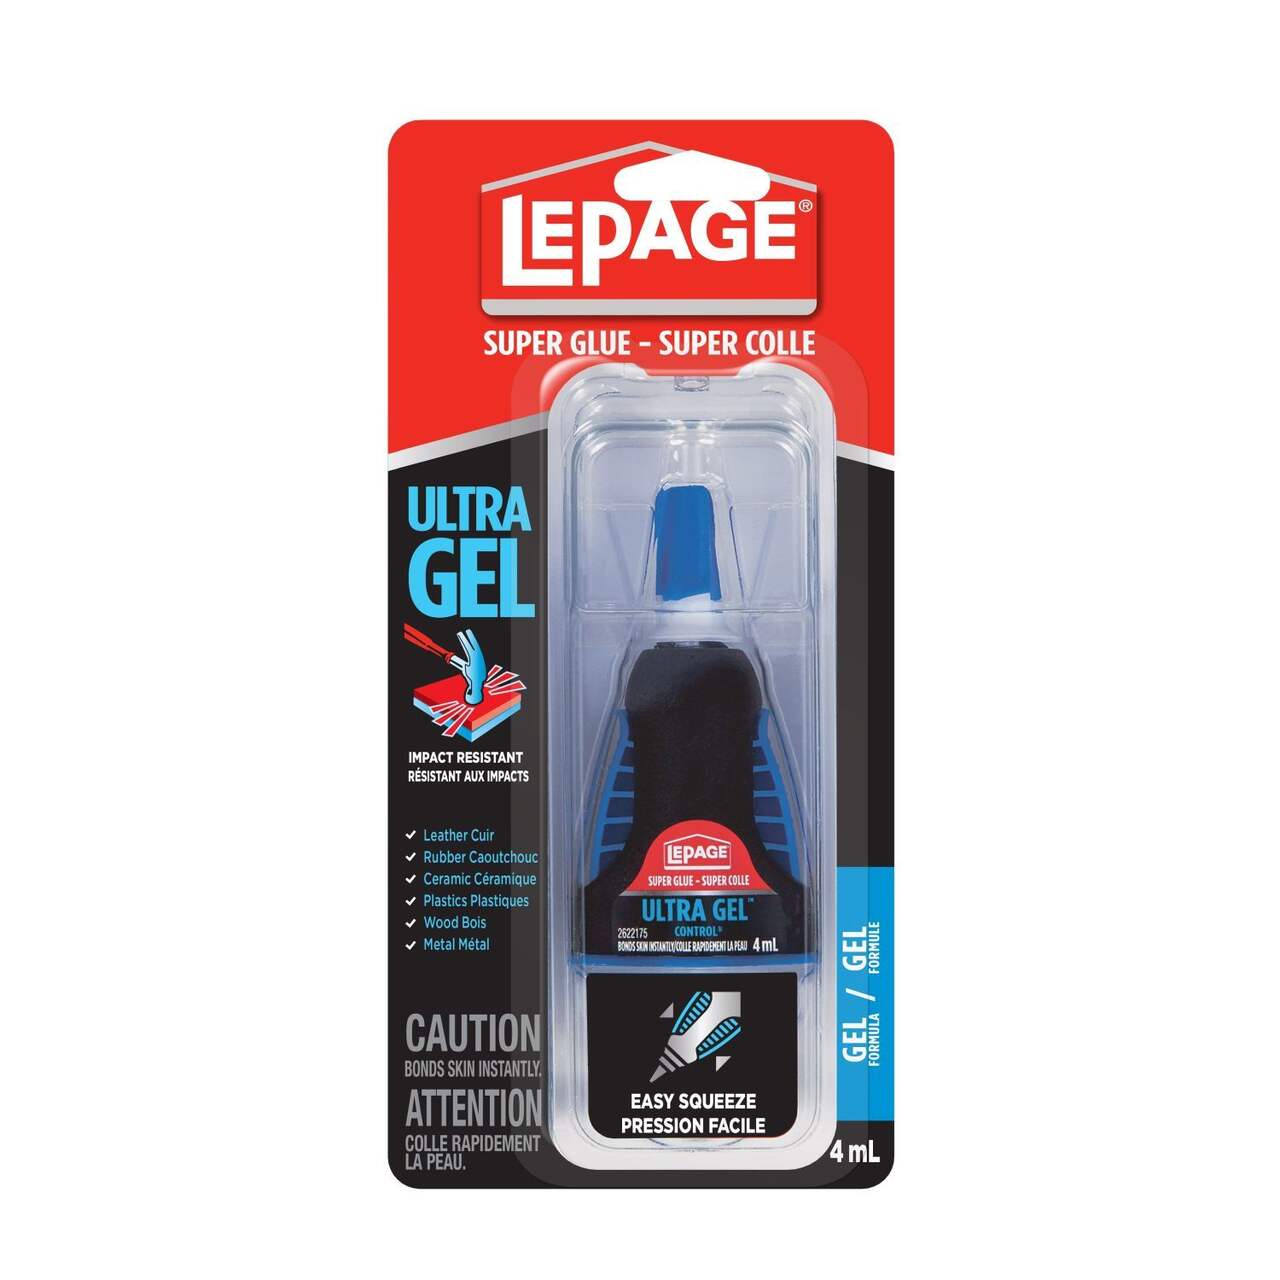 Loctite Super Glue Ultra Gel Minis - Shop Adhesives & Tape at H-E-B